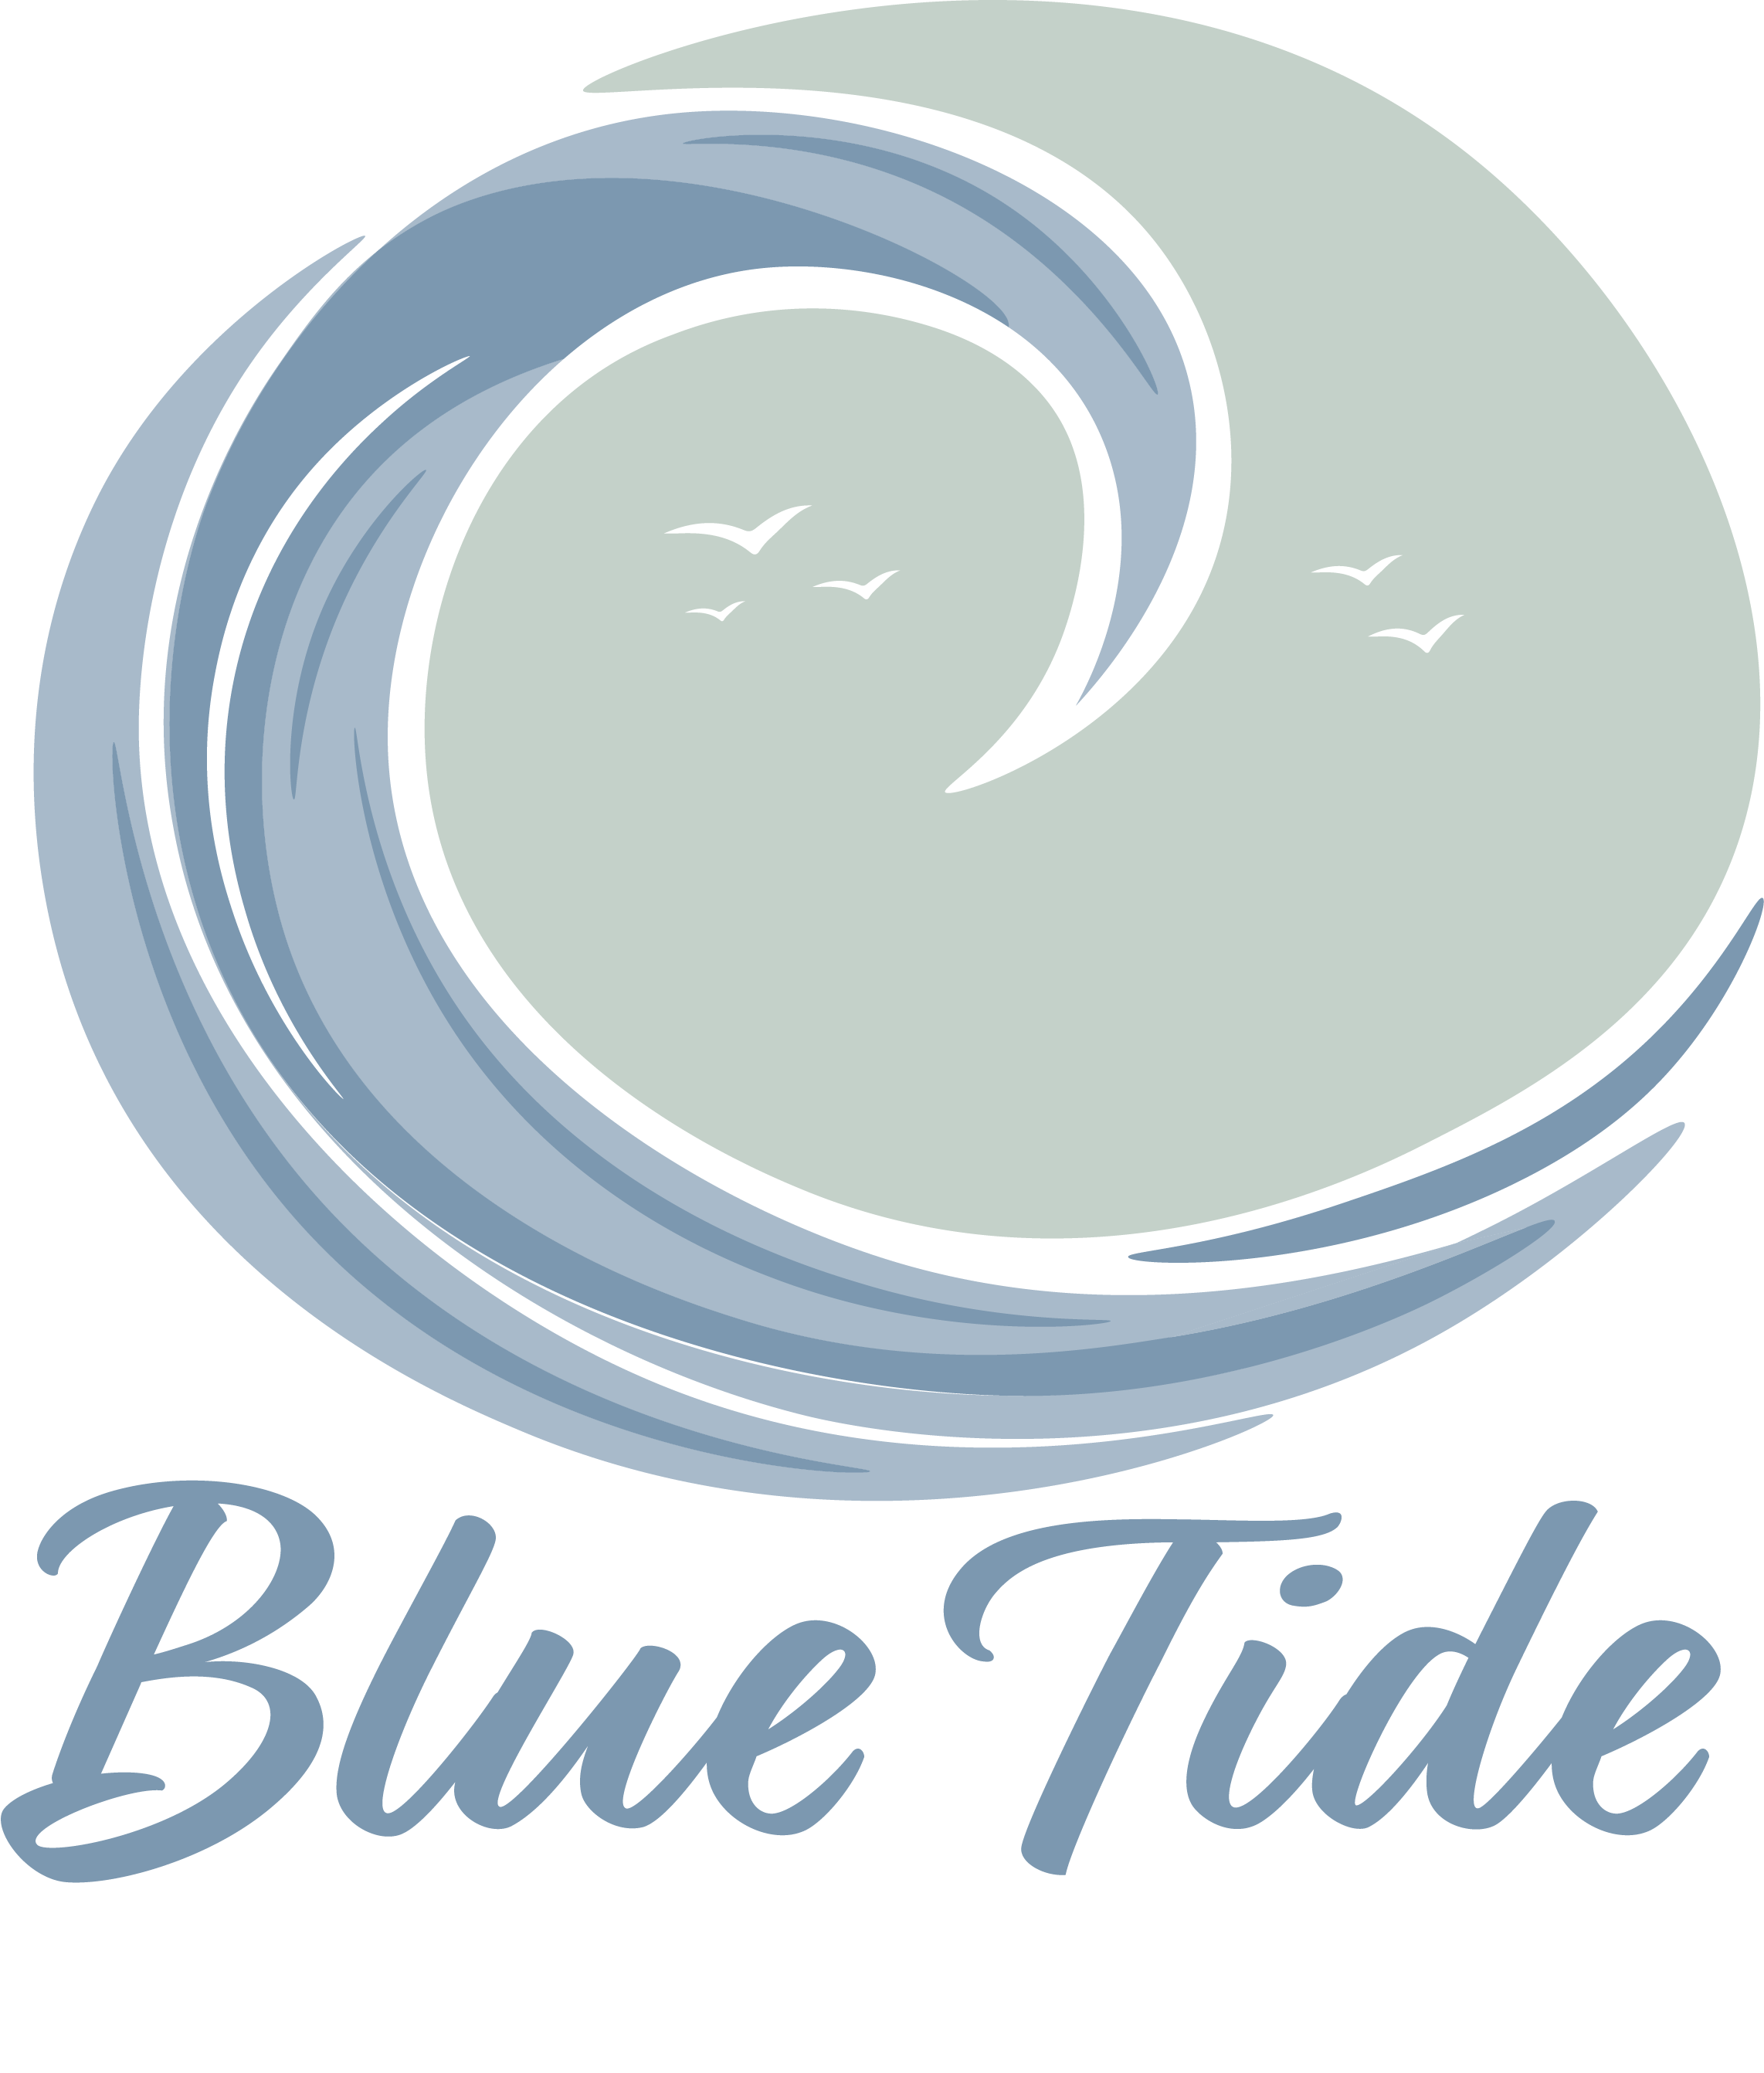 Blue Tide